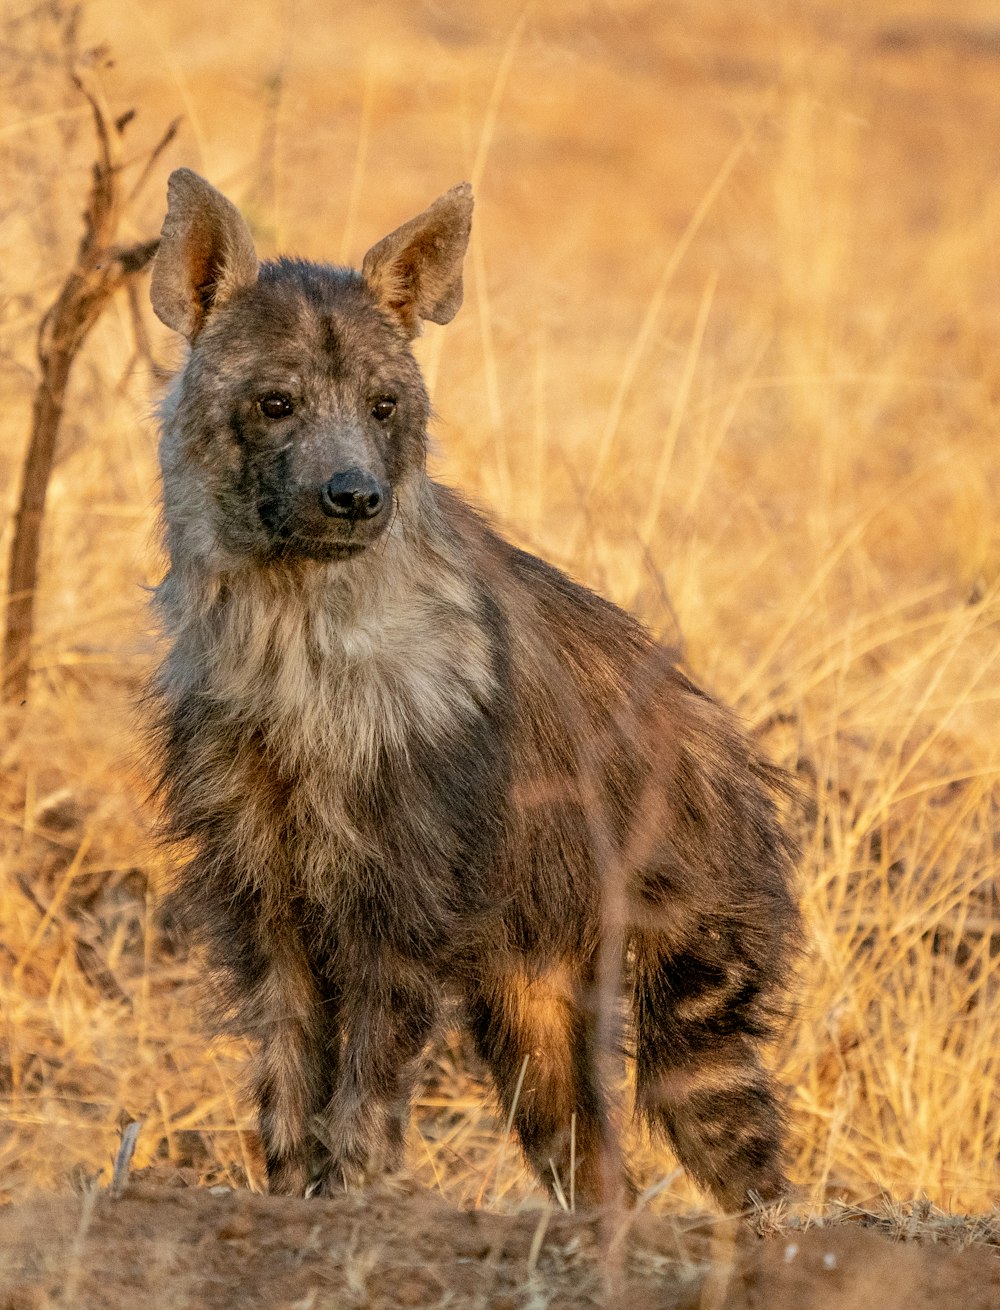 a hyena standing in a field